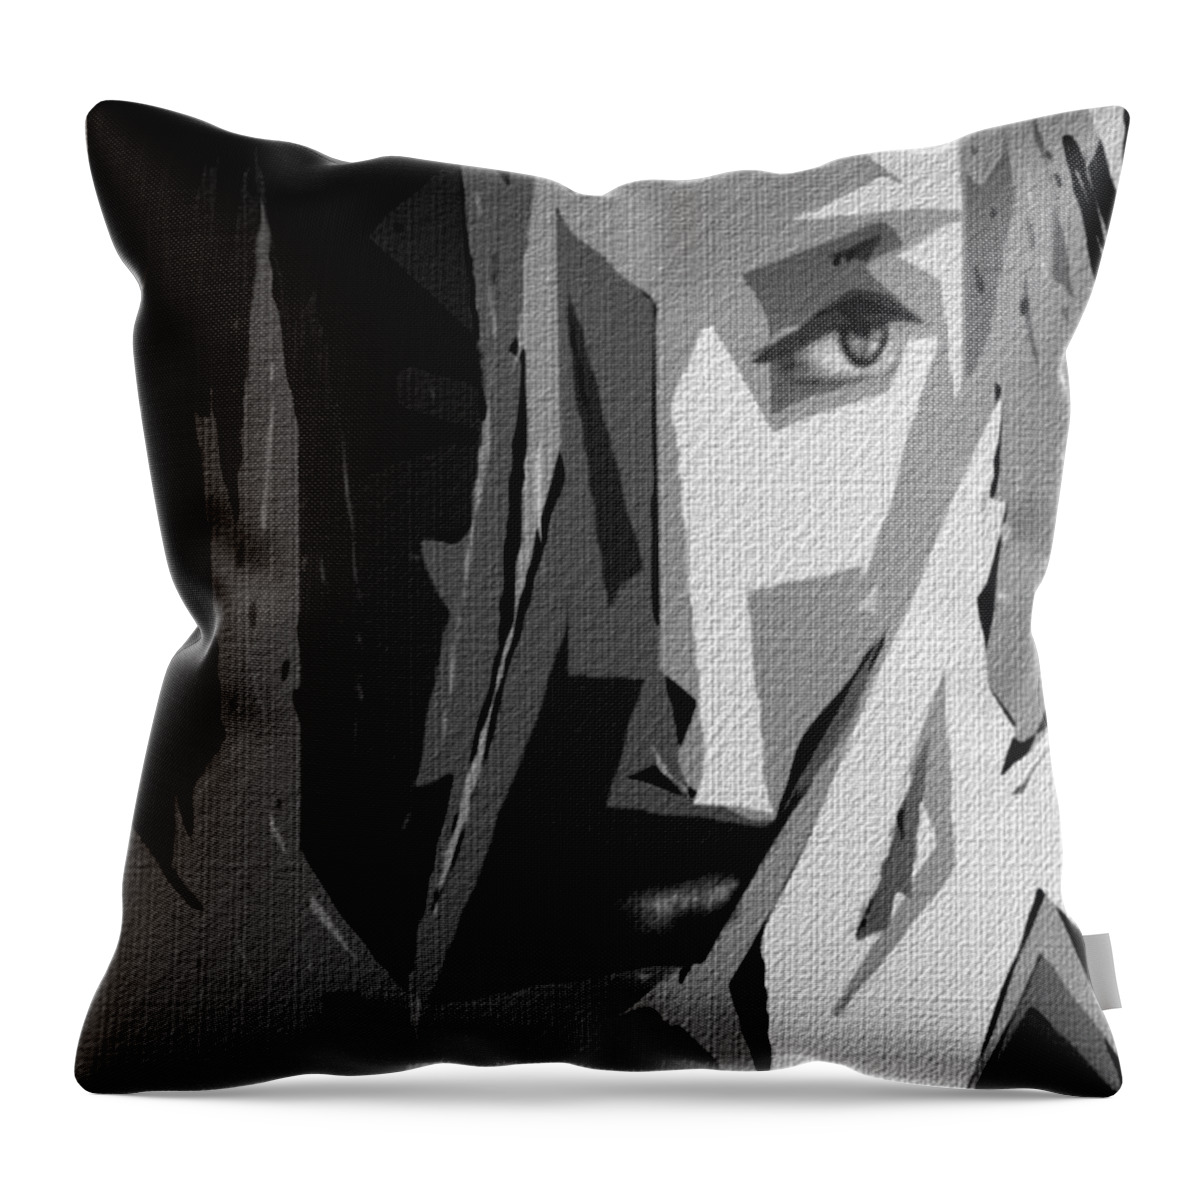 Art Throw Pillow featuring the digital art Female Expressions XLV by Rafael Salazar